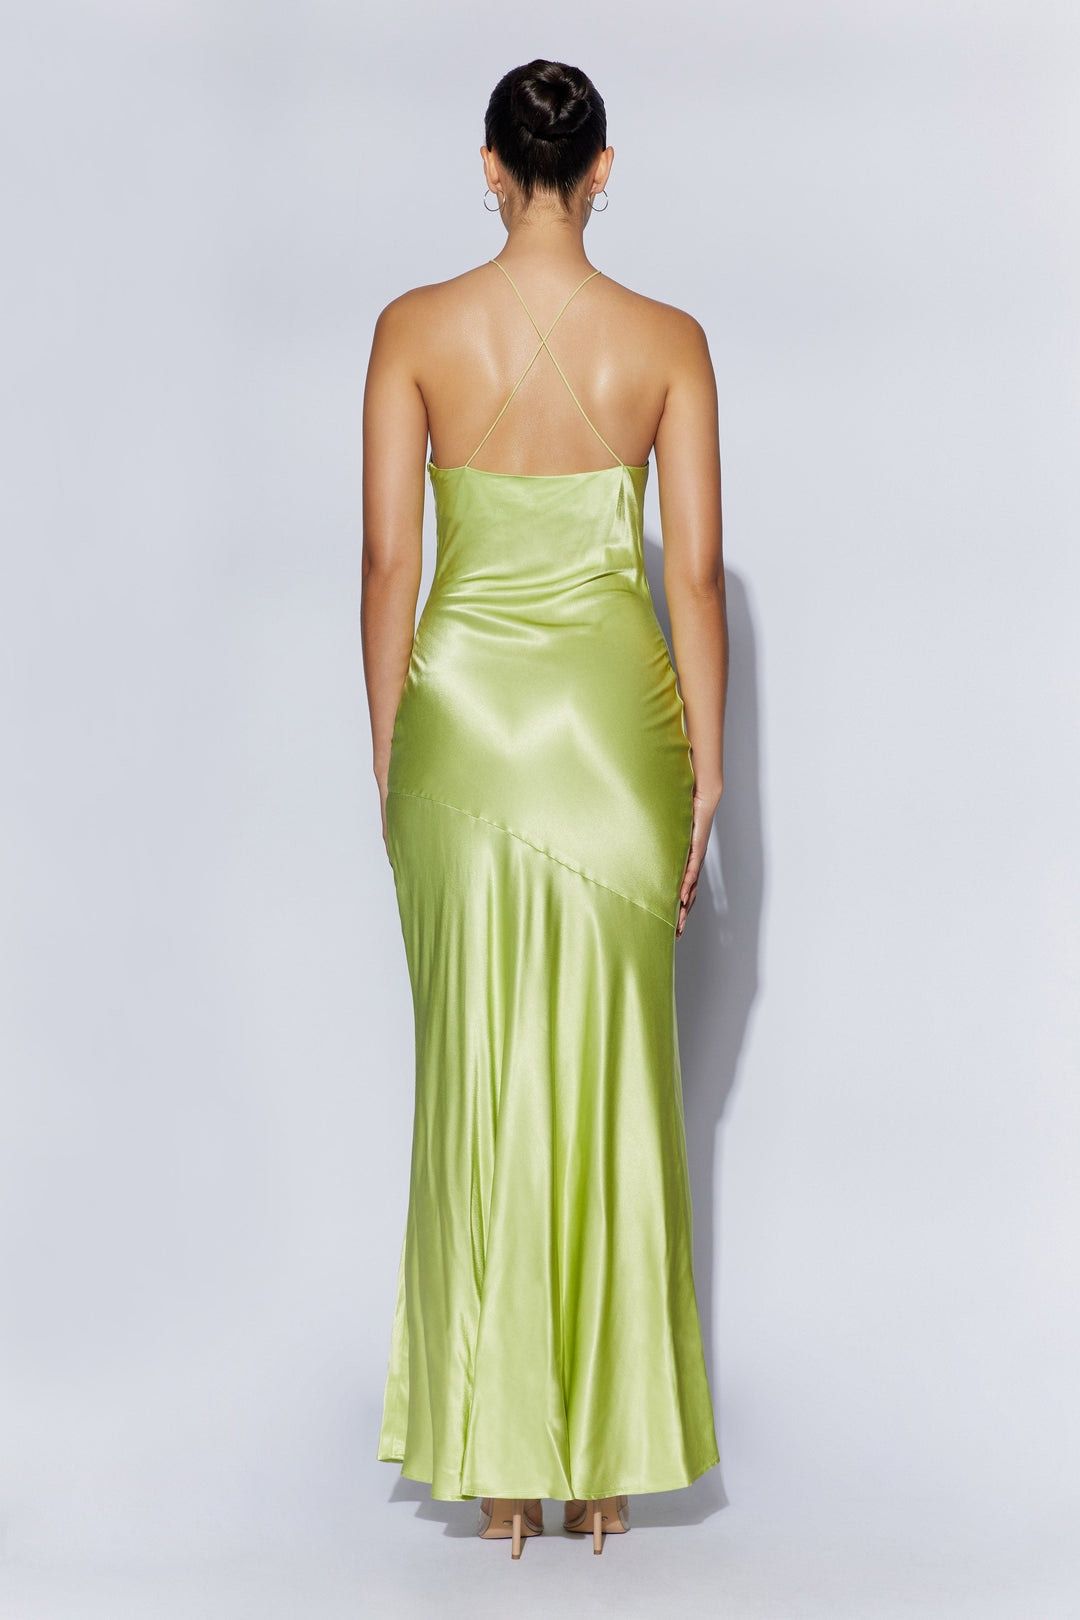 Meshki Size L Halter Sheer Green Mermaid Dress on Queenly